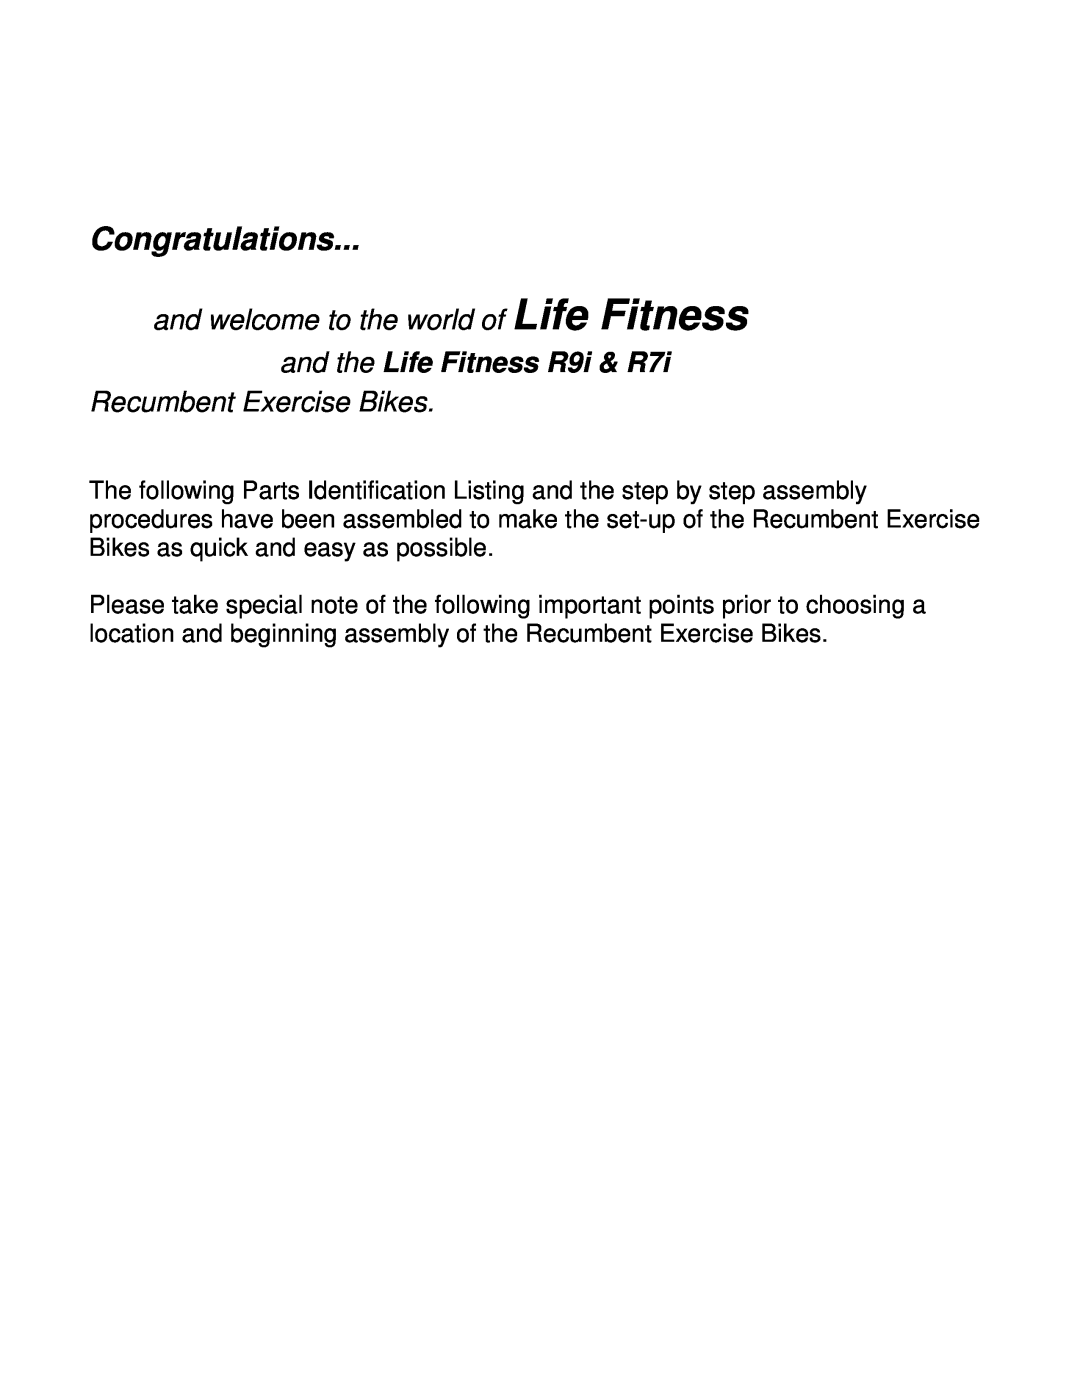 Life Fitness manual Congratulations, and welcome to the world of Life Fitness, and the Life Fitness R9i & R7i 